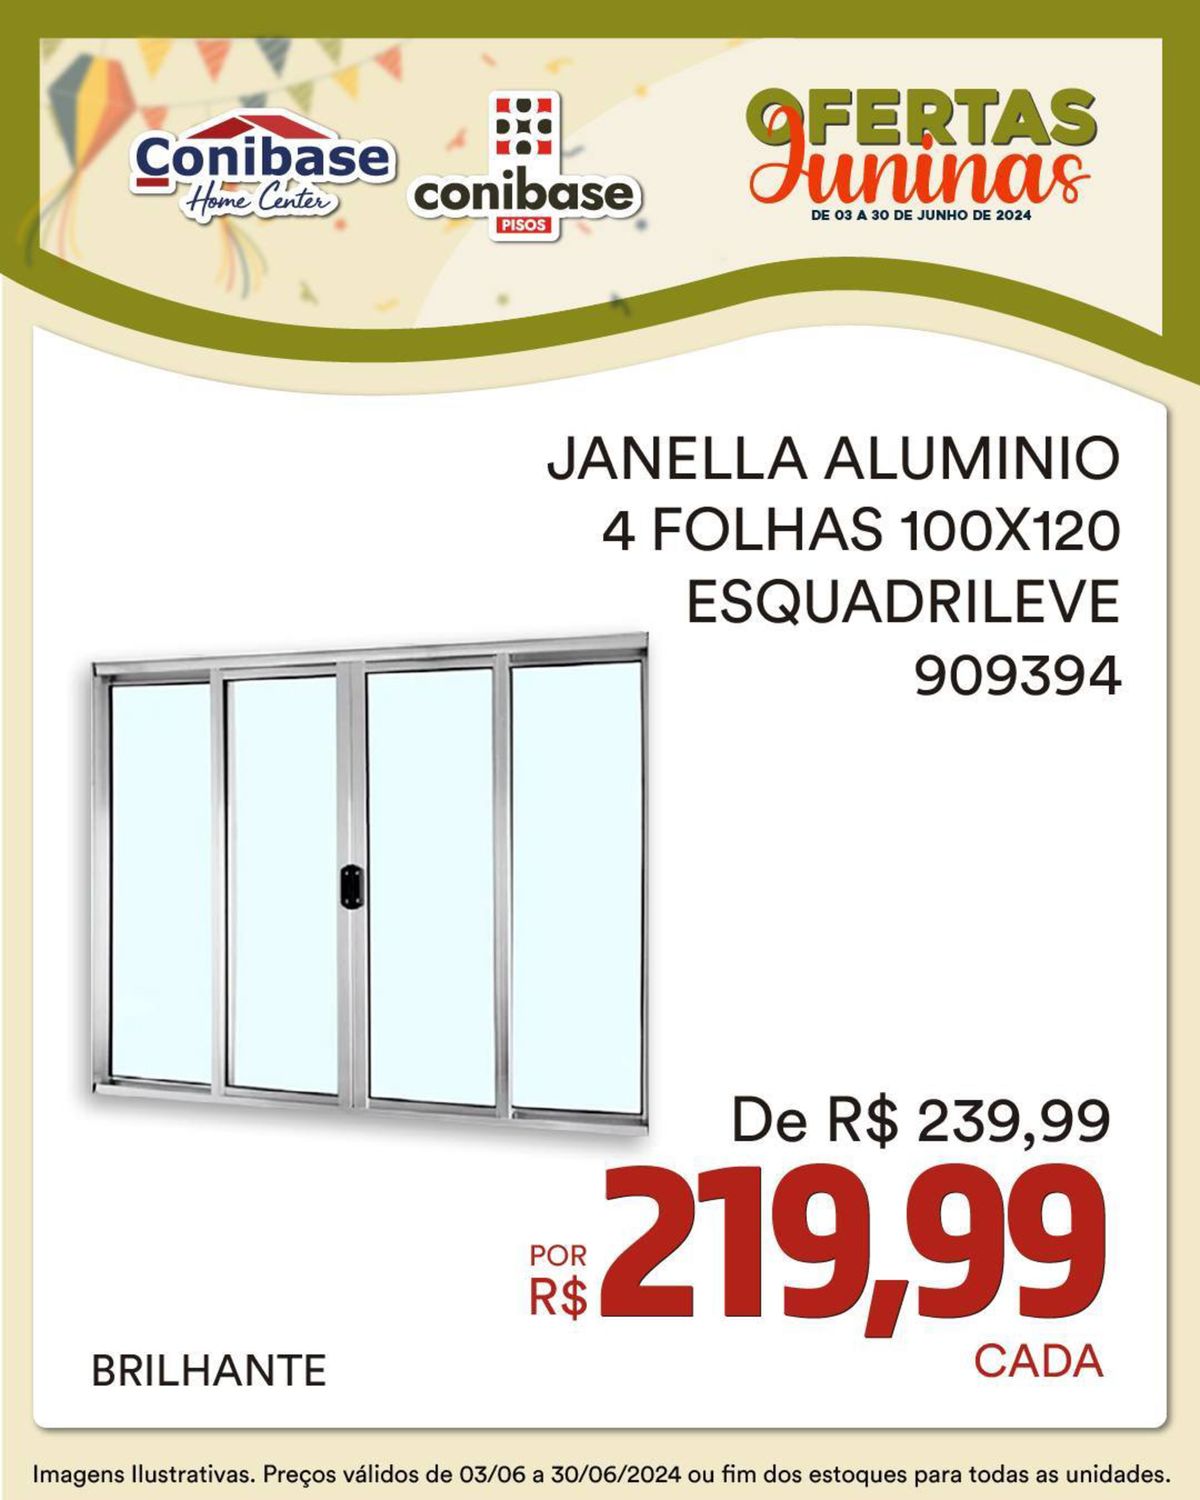 JANELLA ALUMINIO 4 FOLHAS 100X120 - ESQUADRILEVE